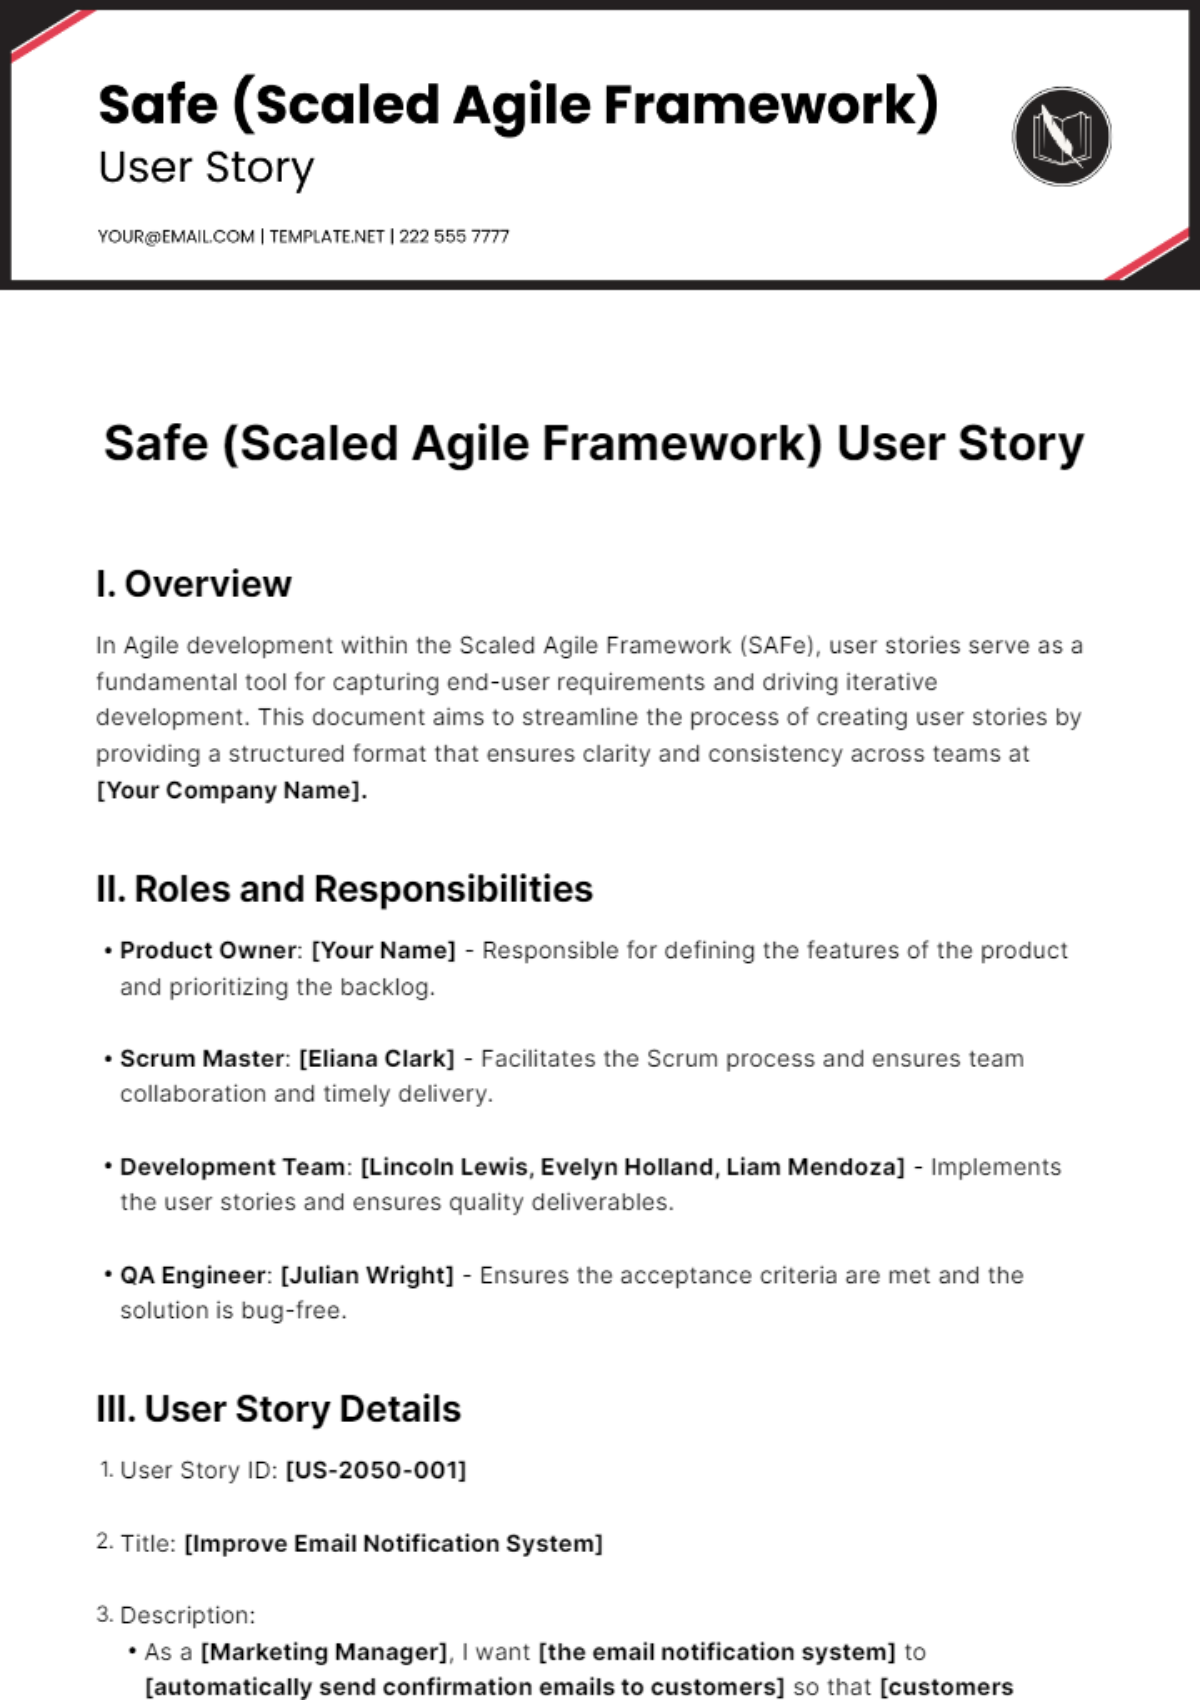 Safe (Scaled Agile Framework) User Story Template